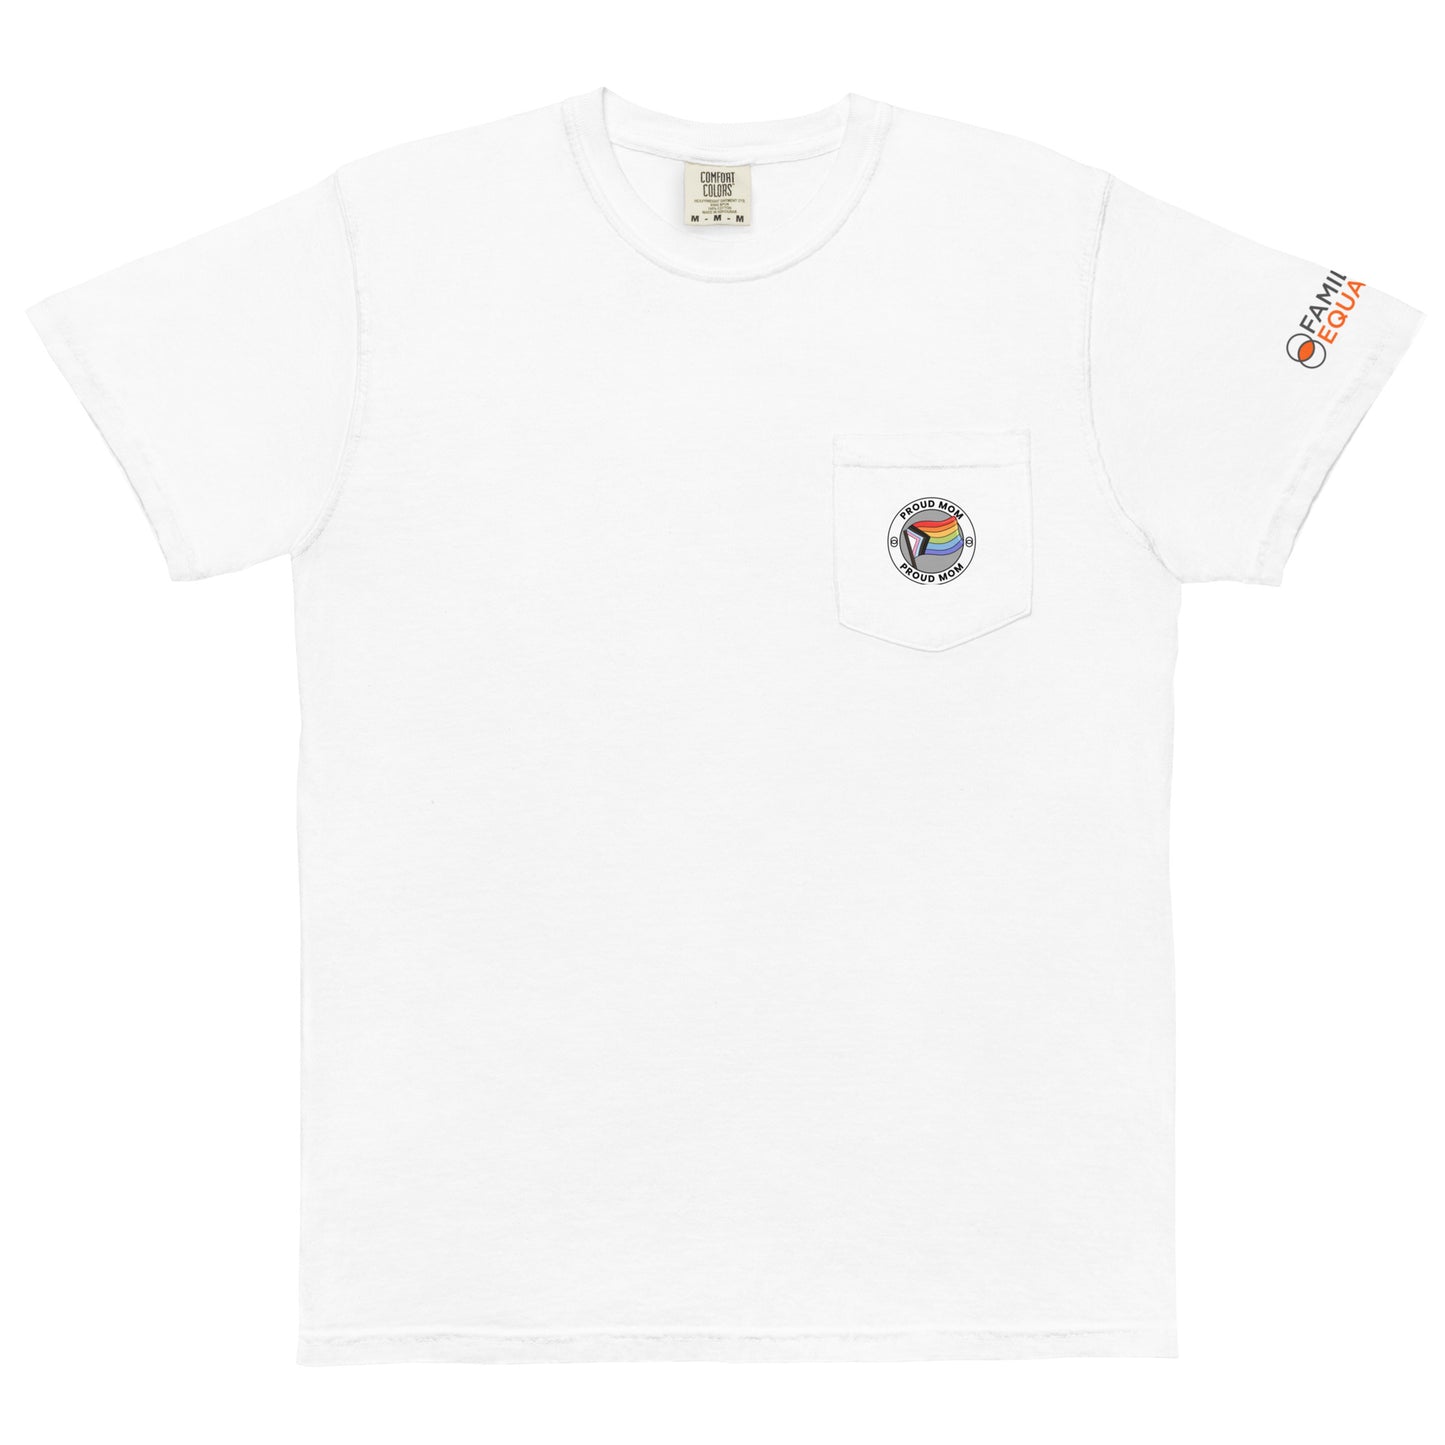 Proud Mom | Unisex garment-dyed pocket t-shirt in white